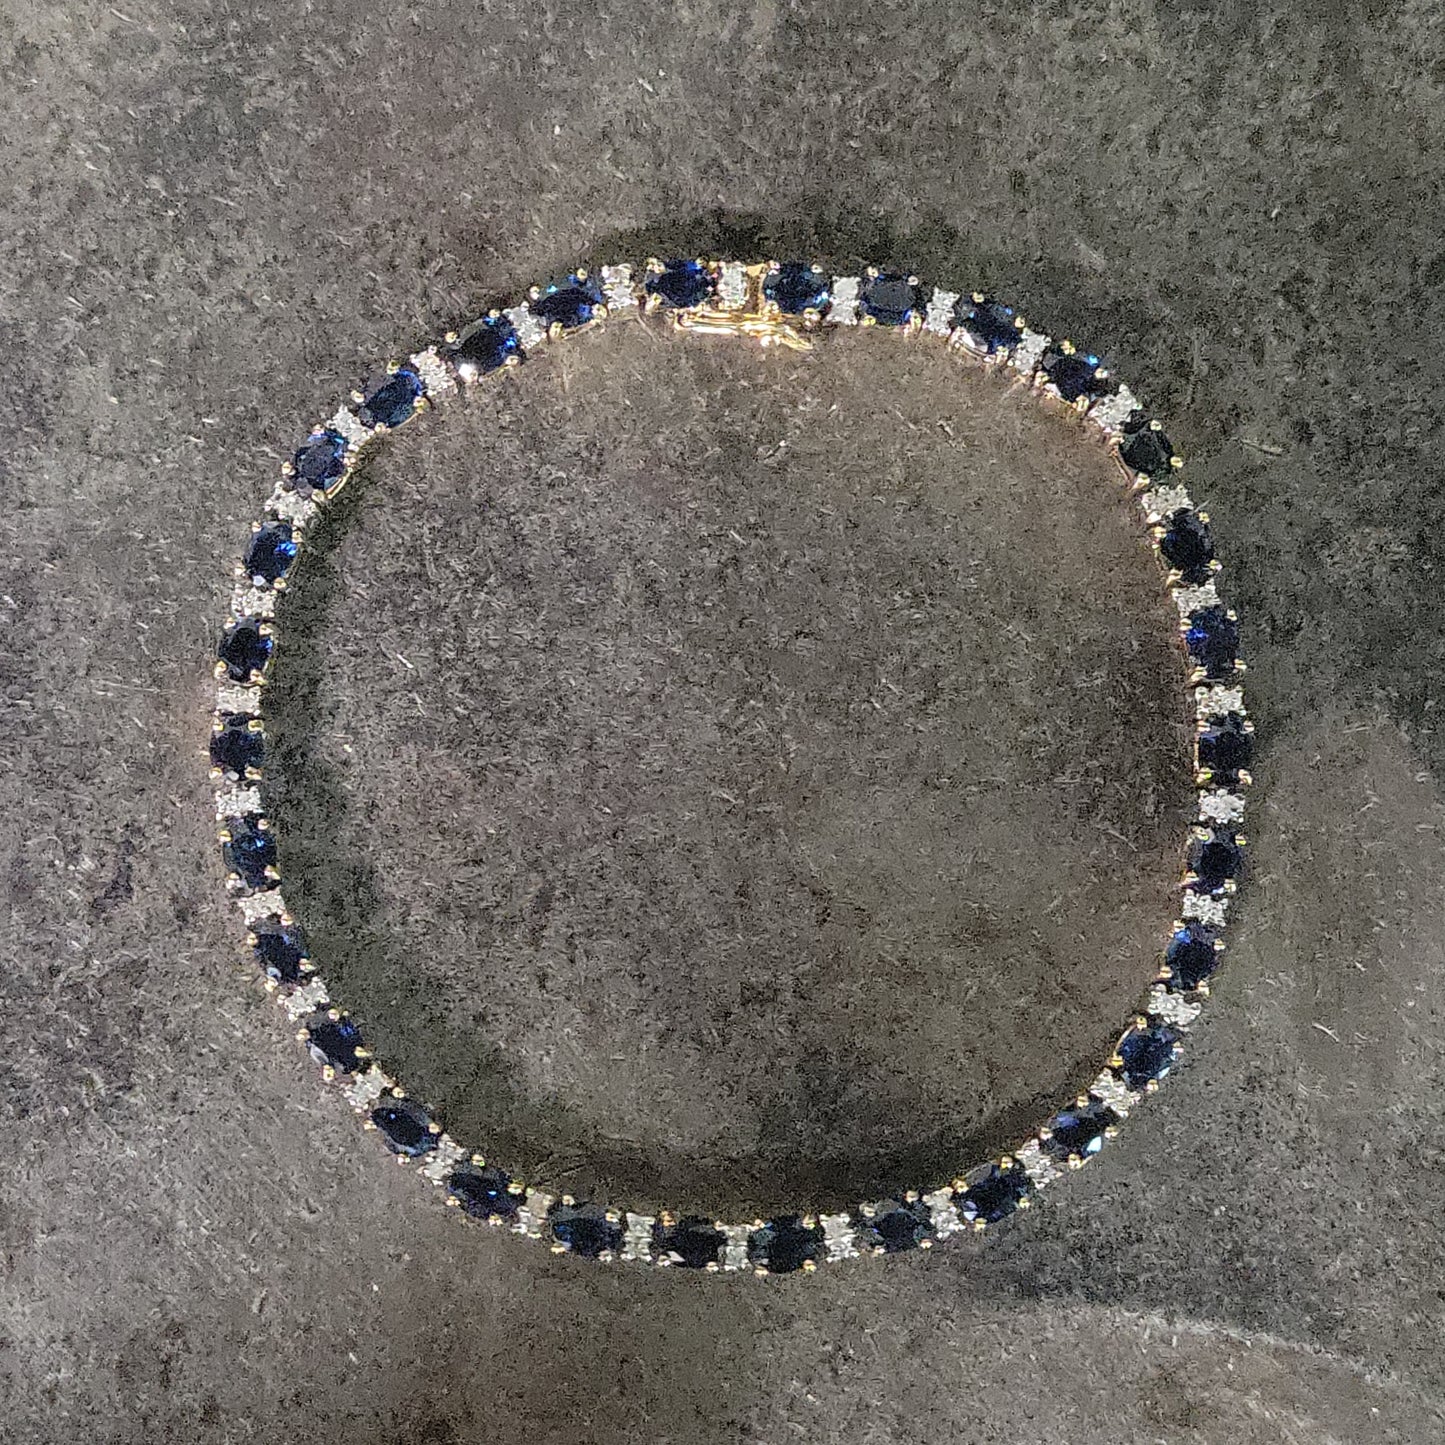 14k Sapphire Bracelet